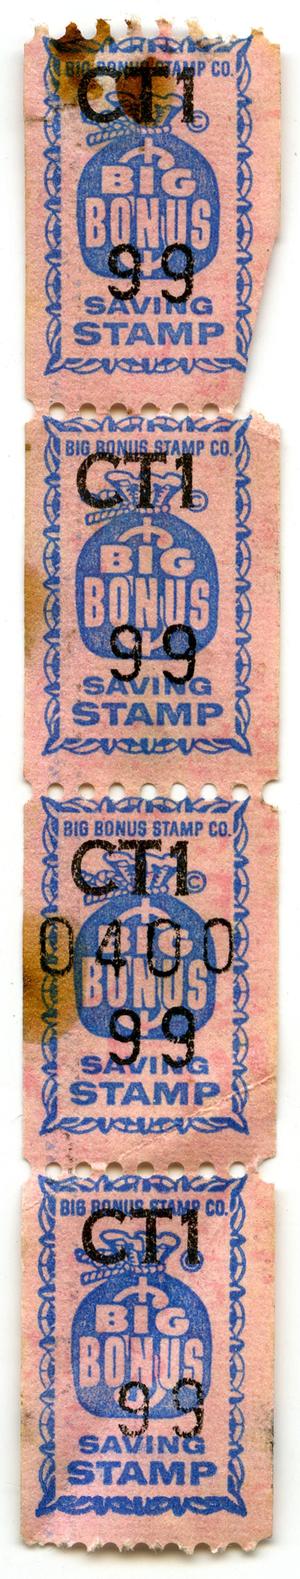 [Big Bonus saving stamps]